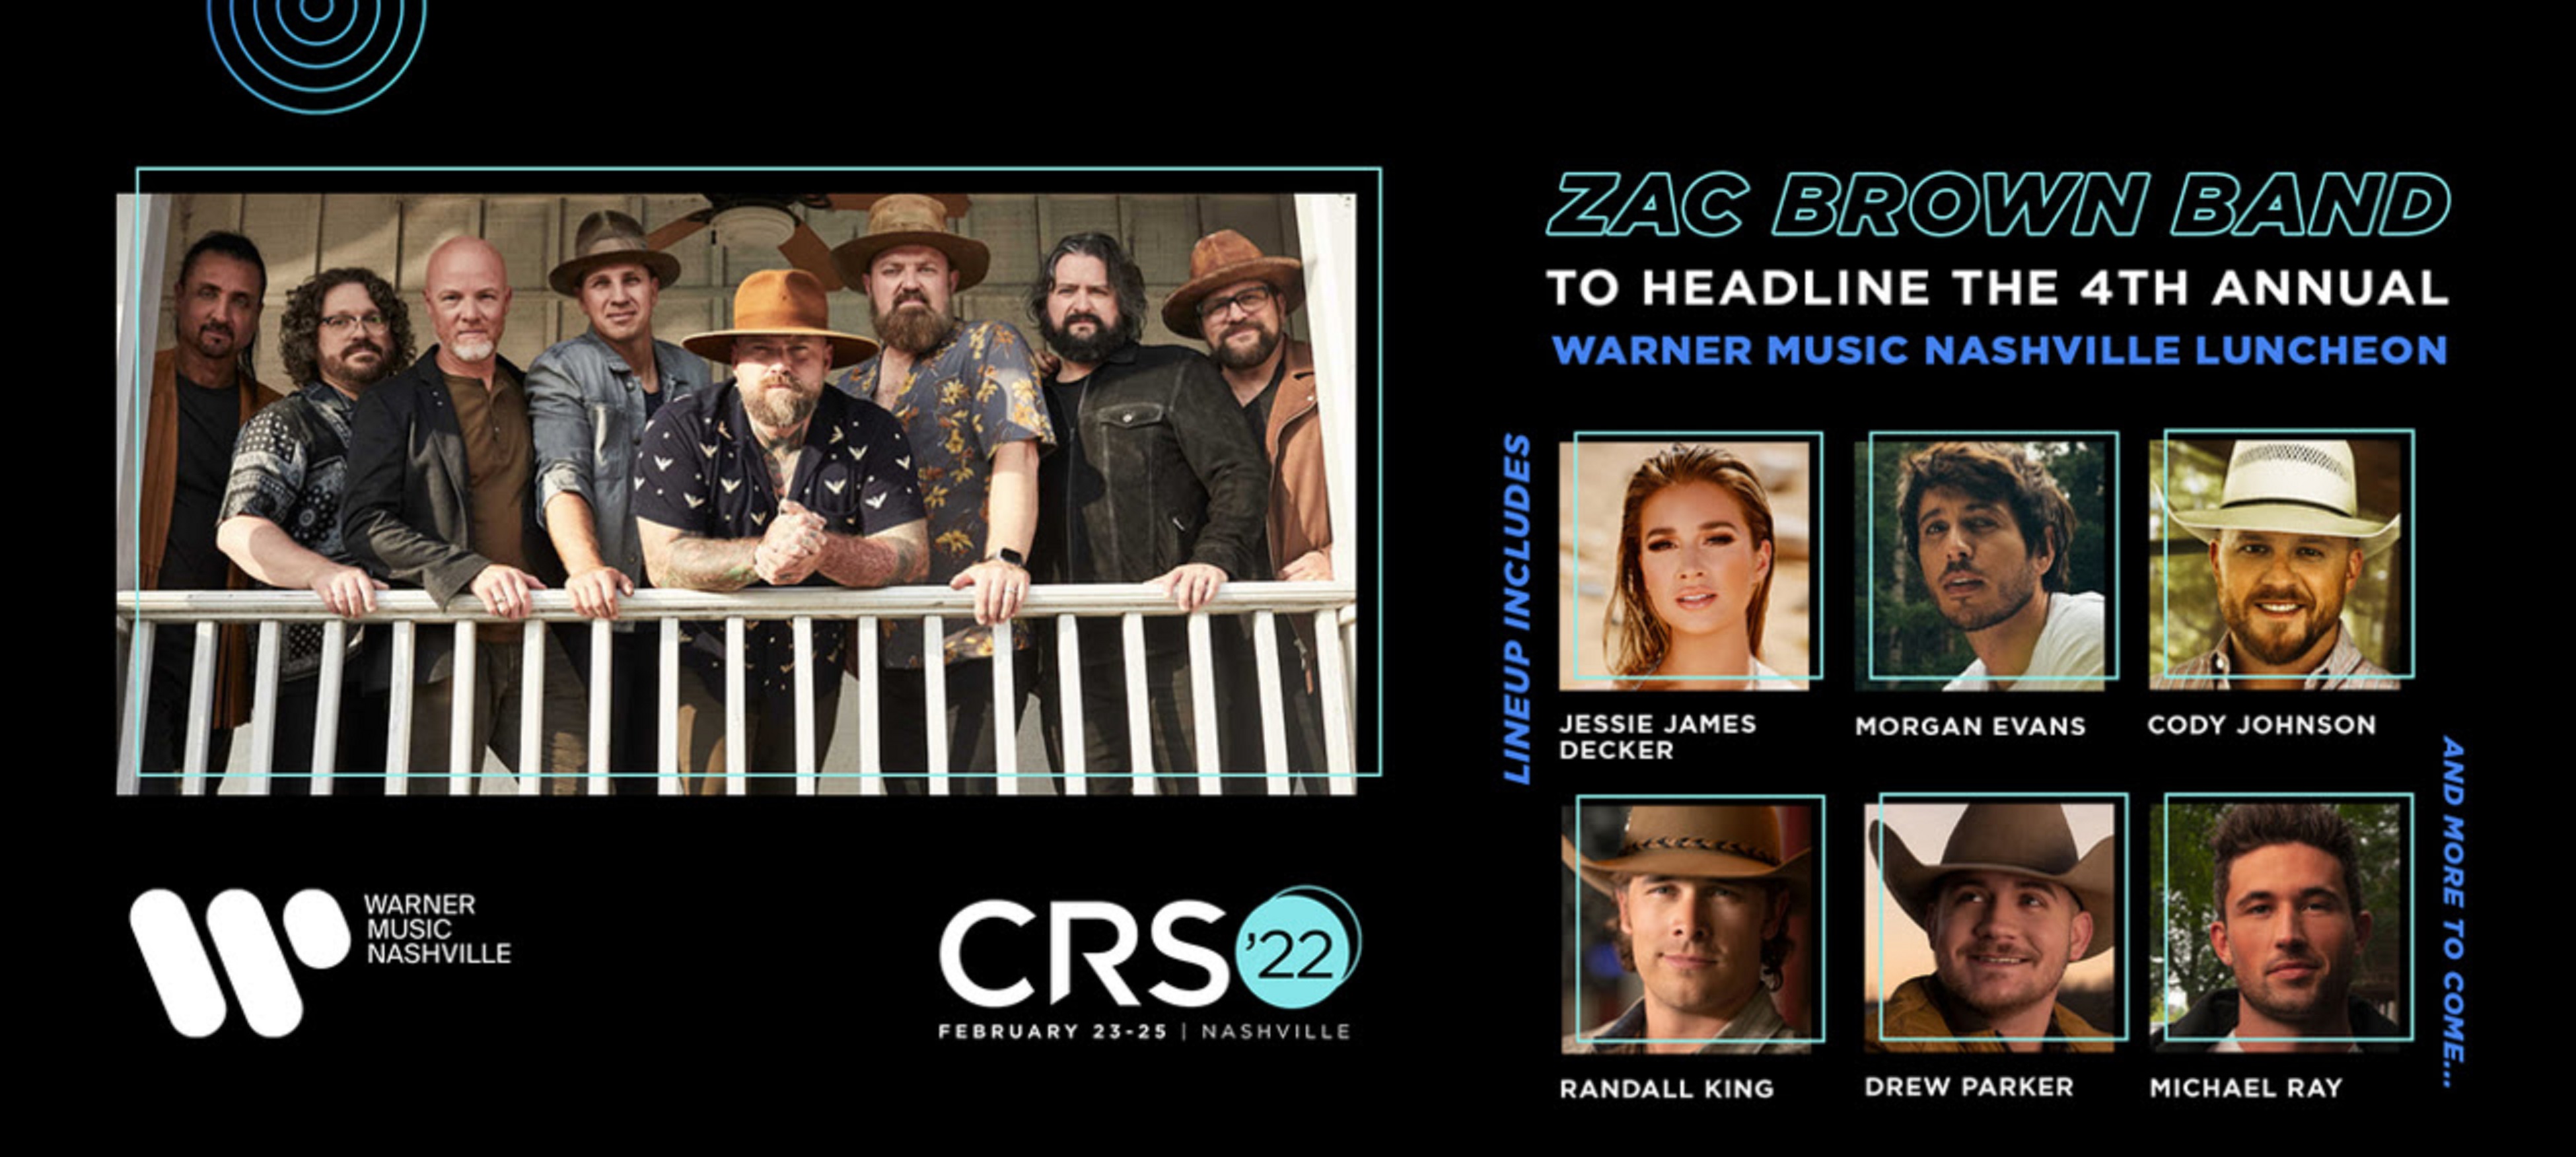 Zac Brown Band to Headline 4th Annual Warner Music Nashville CRS 2022 Luncheon